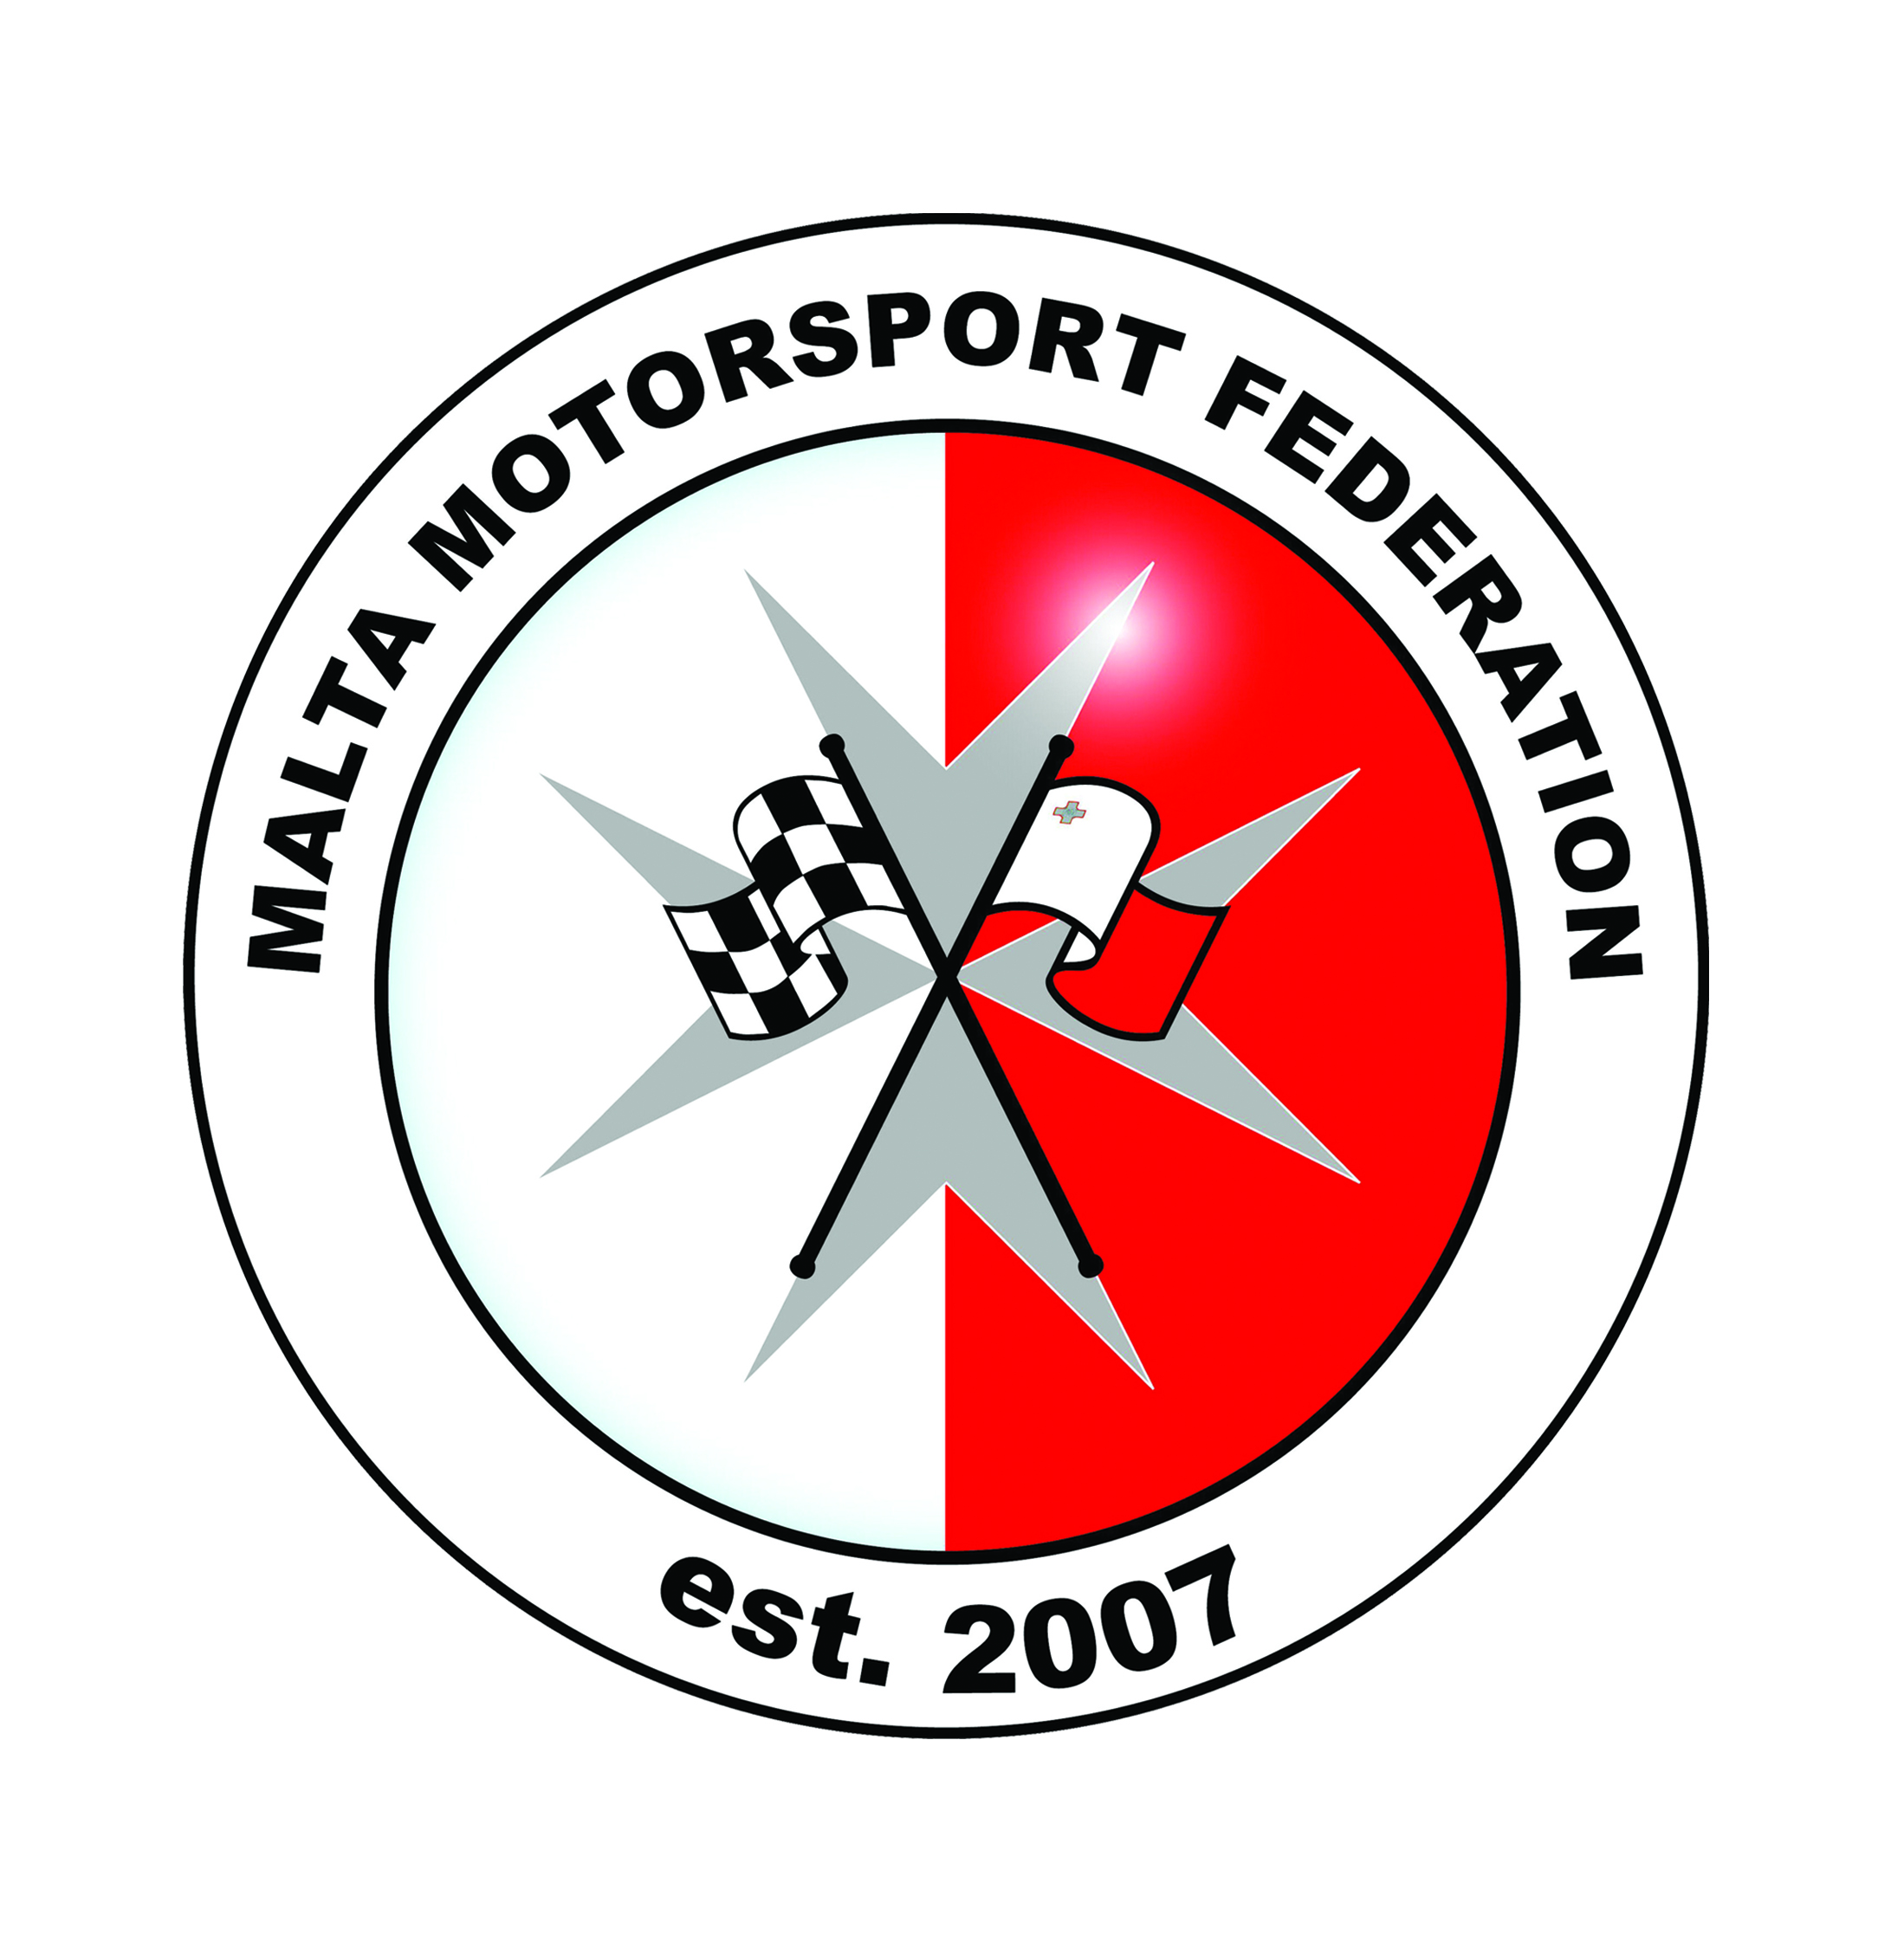 Malta Motorsorts Federation